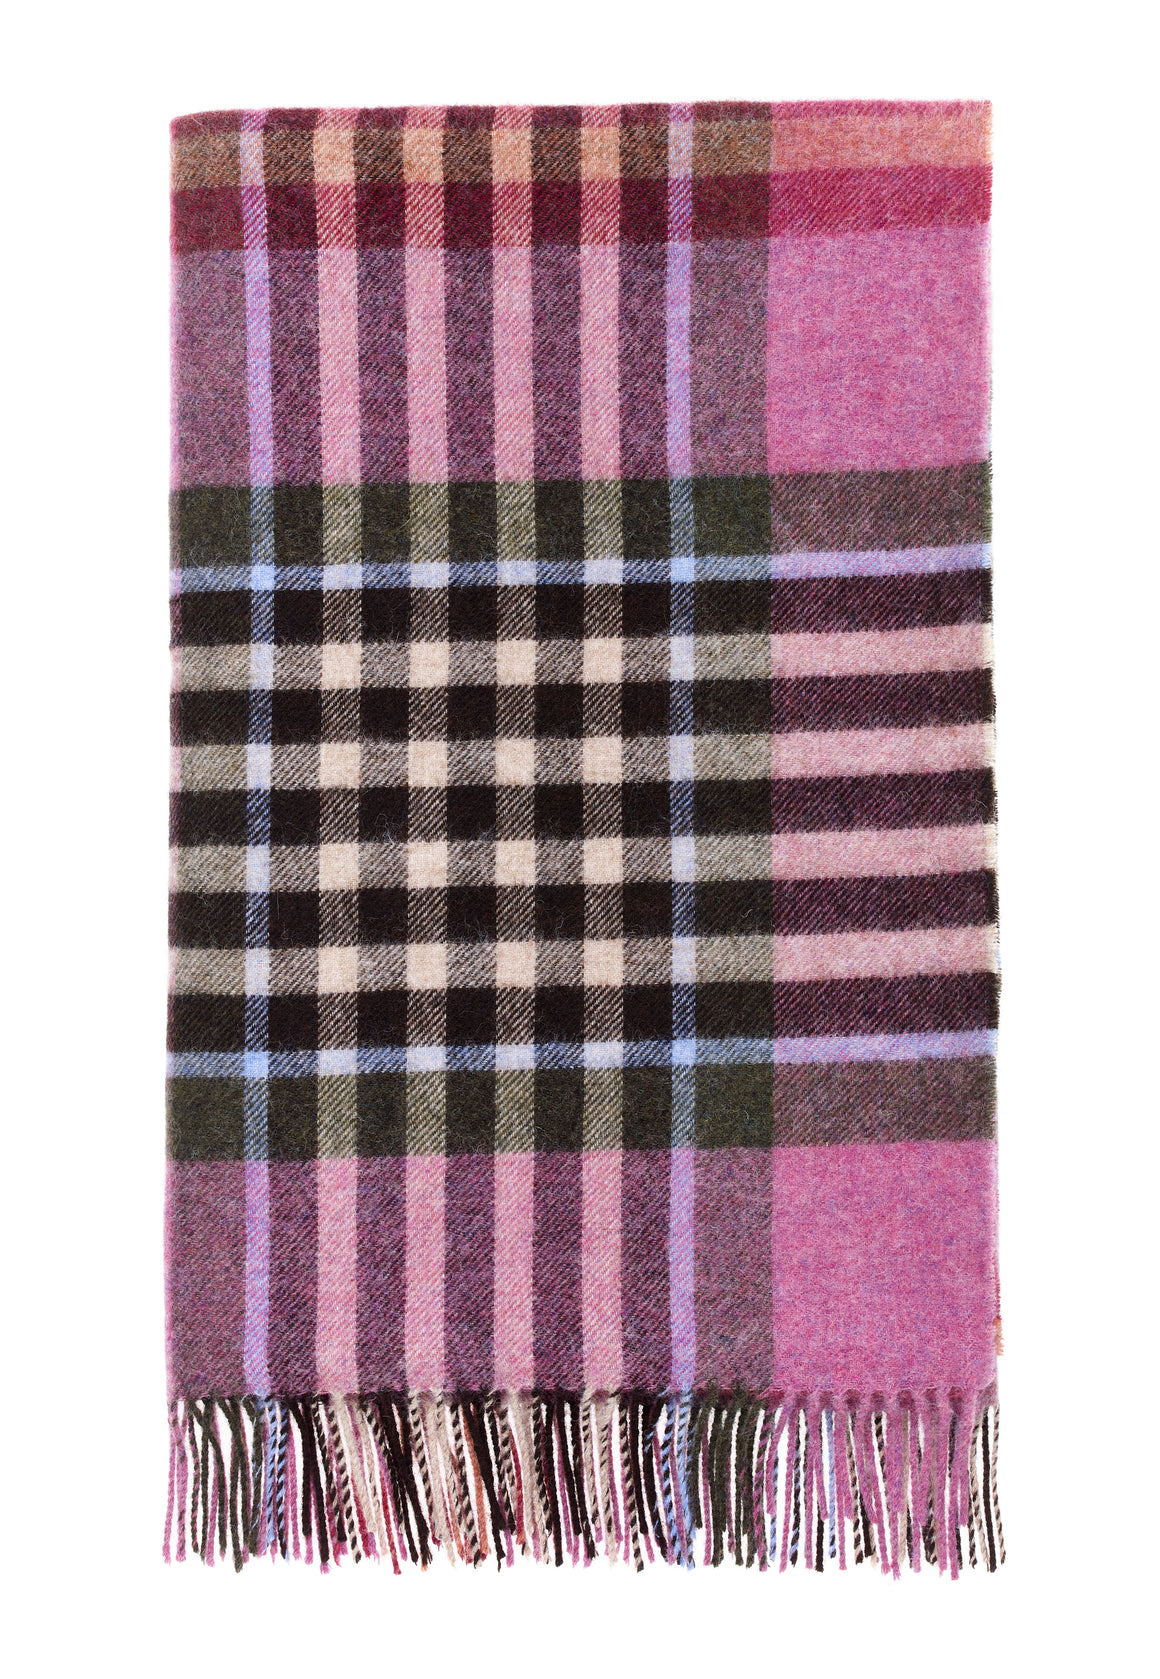 Shetland Pure New Wool - Chesil Raspberry - Throw Blanket - Bronte by Moon